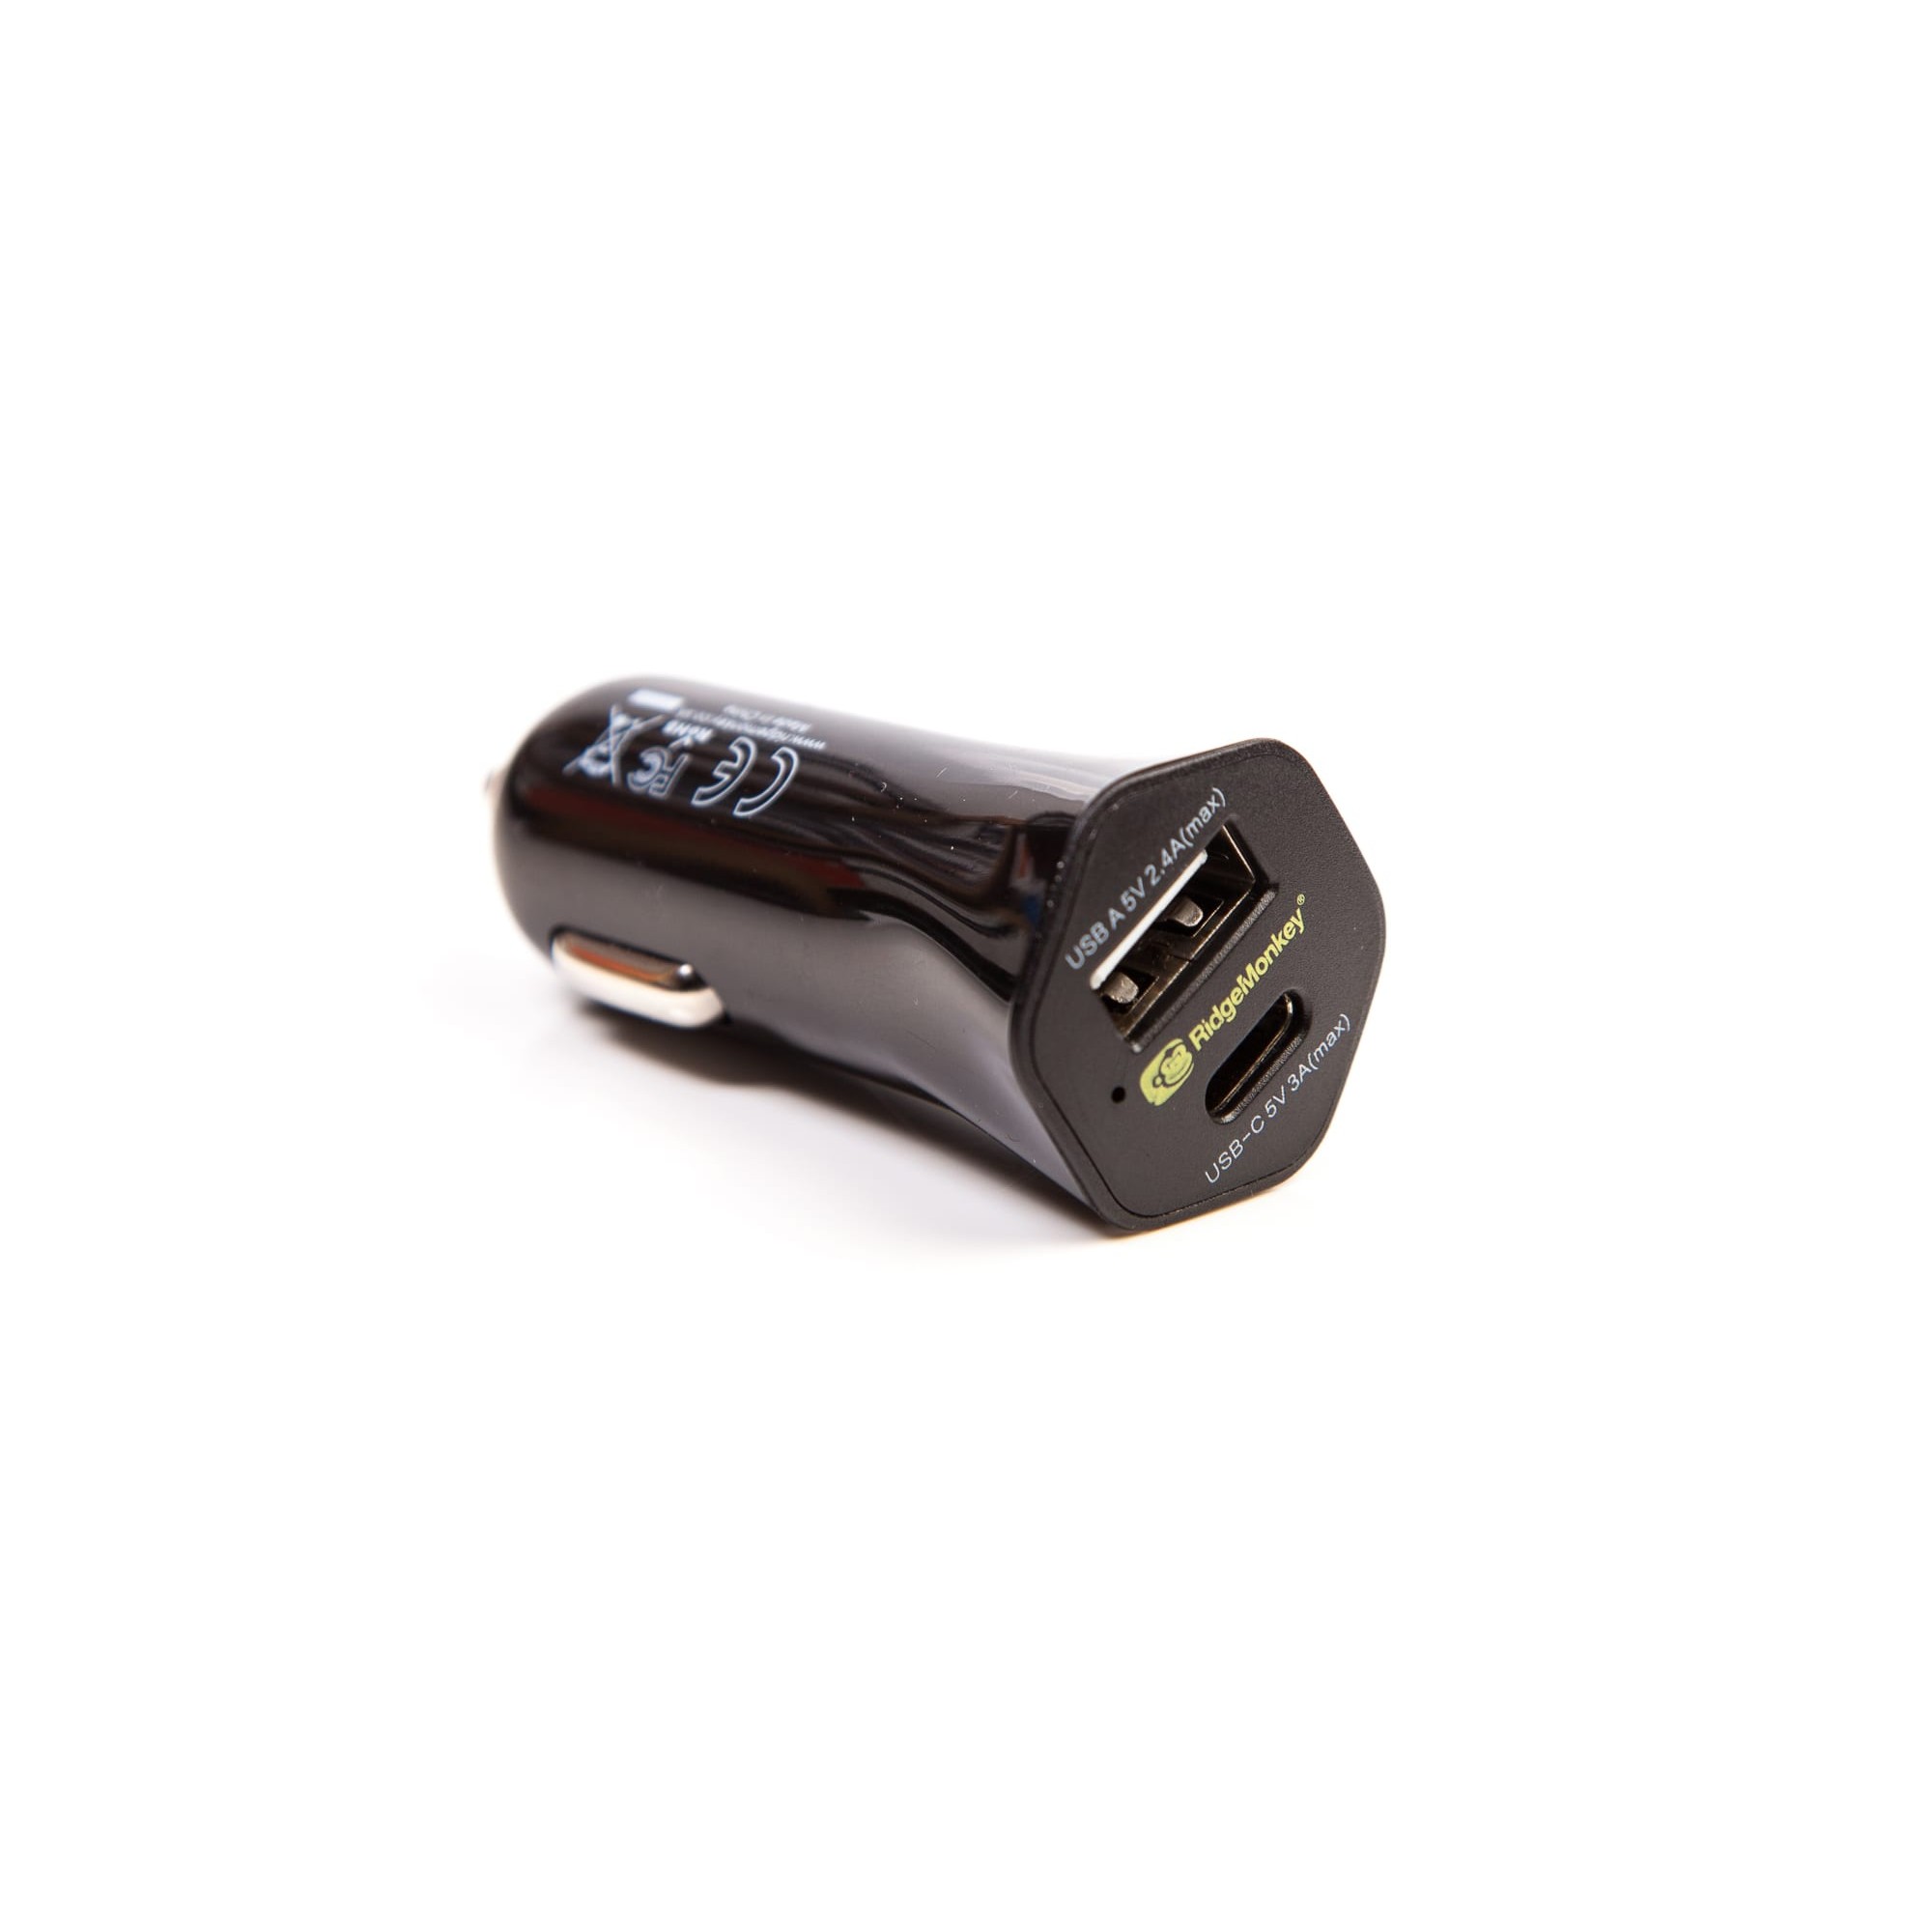 RidgeMonkey Vault 15W USB-C Car Charger Adaptor - RM145